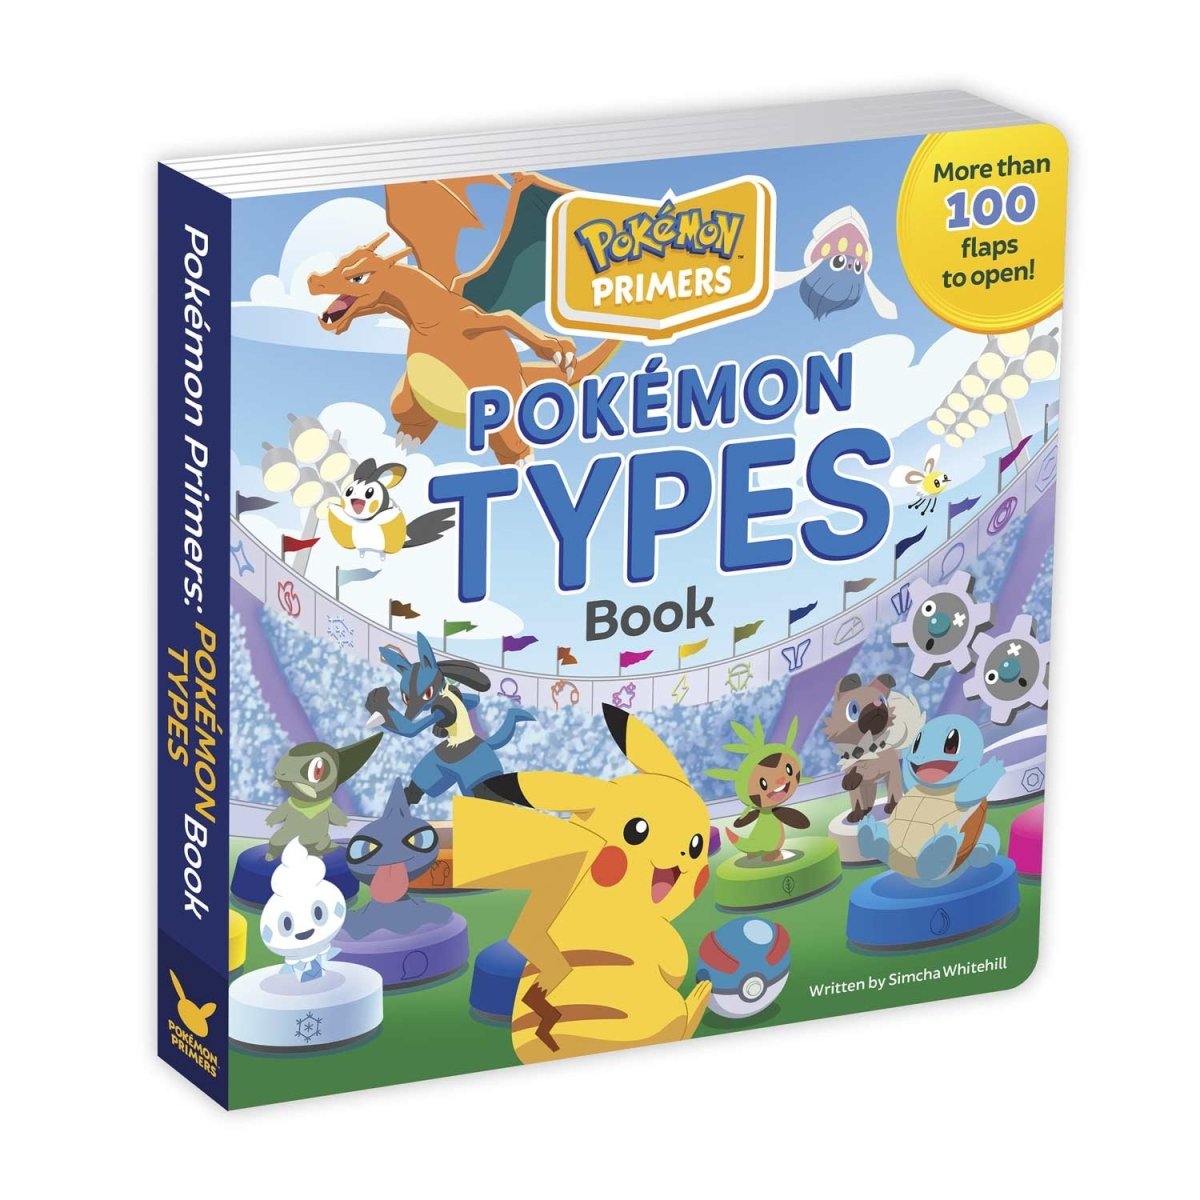 Pokémon Primers: Pokémon Types Book